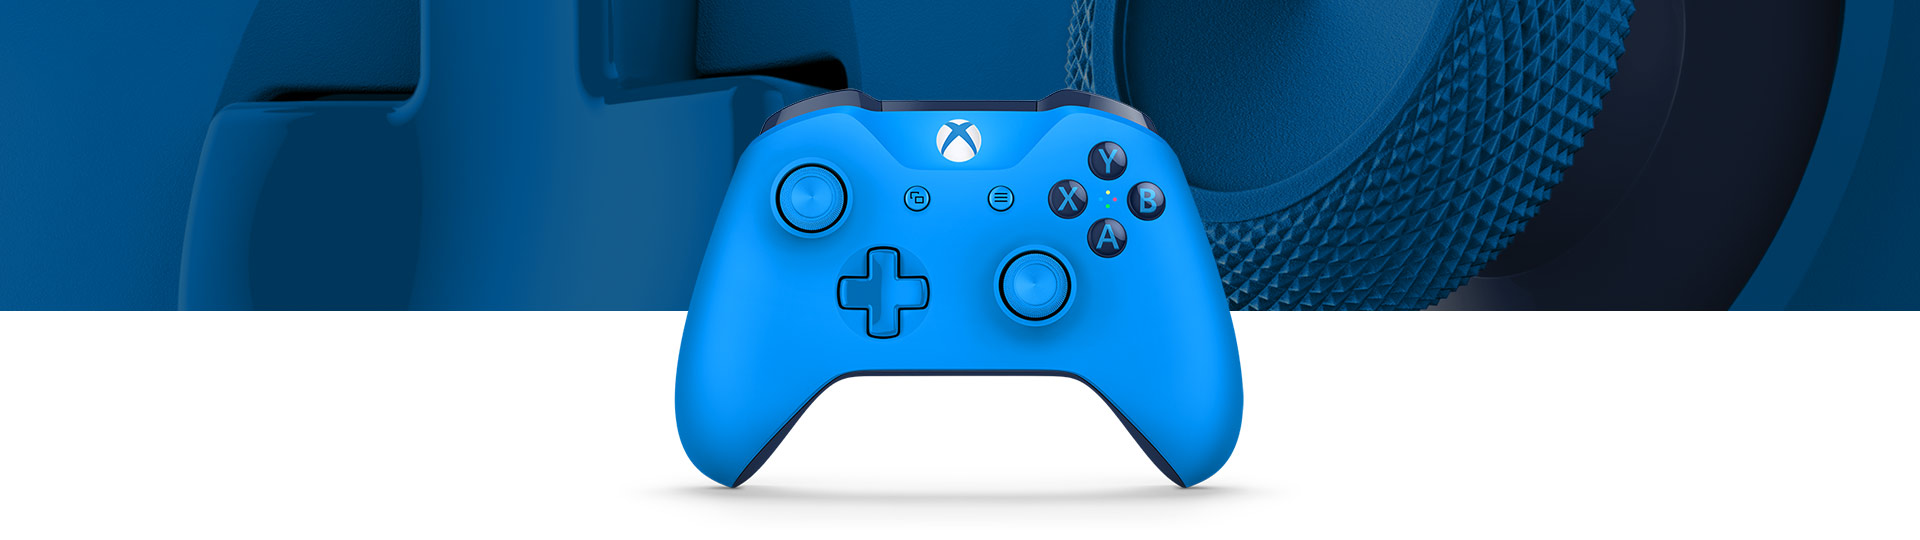 light blue xbox 360 controller